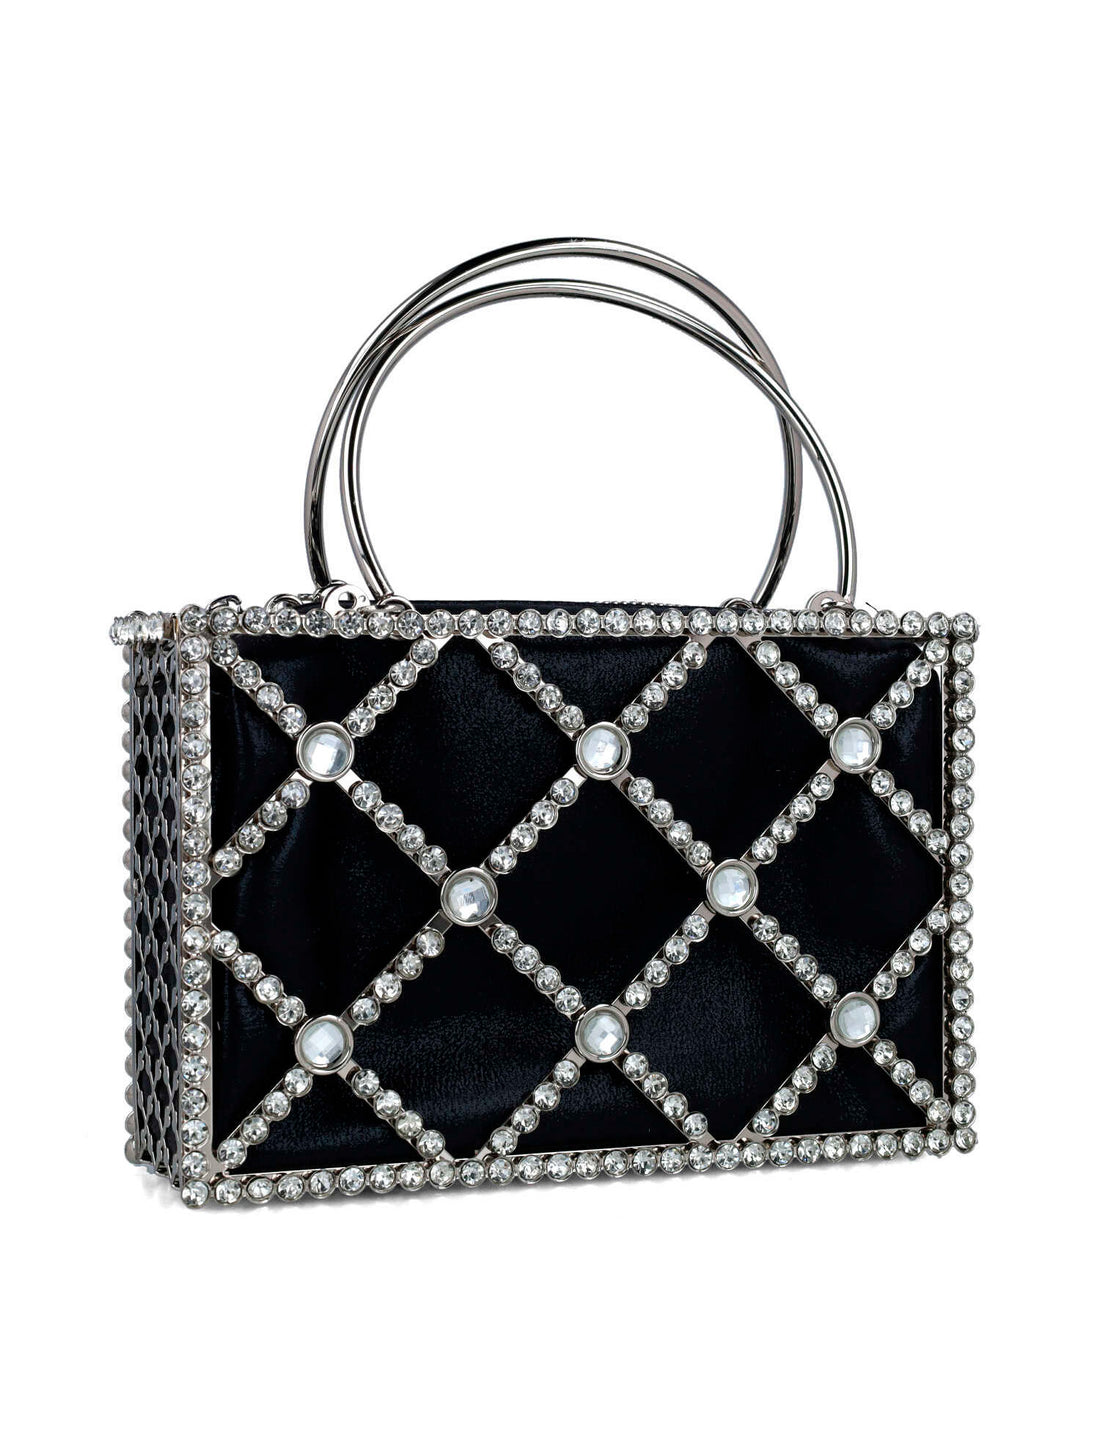 Embellished Square Handbag With Round Straps_85720_01_02